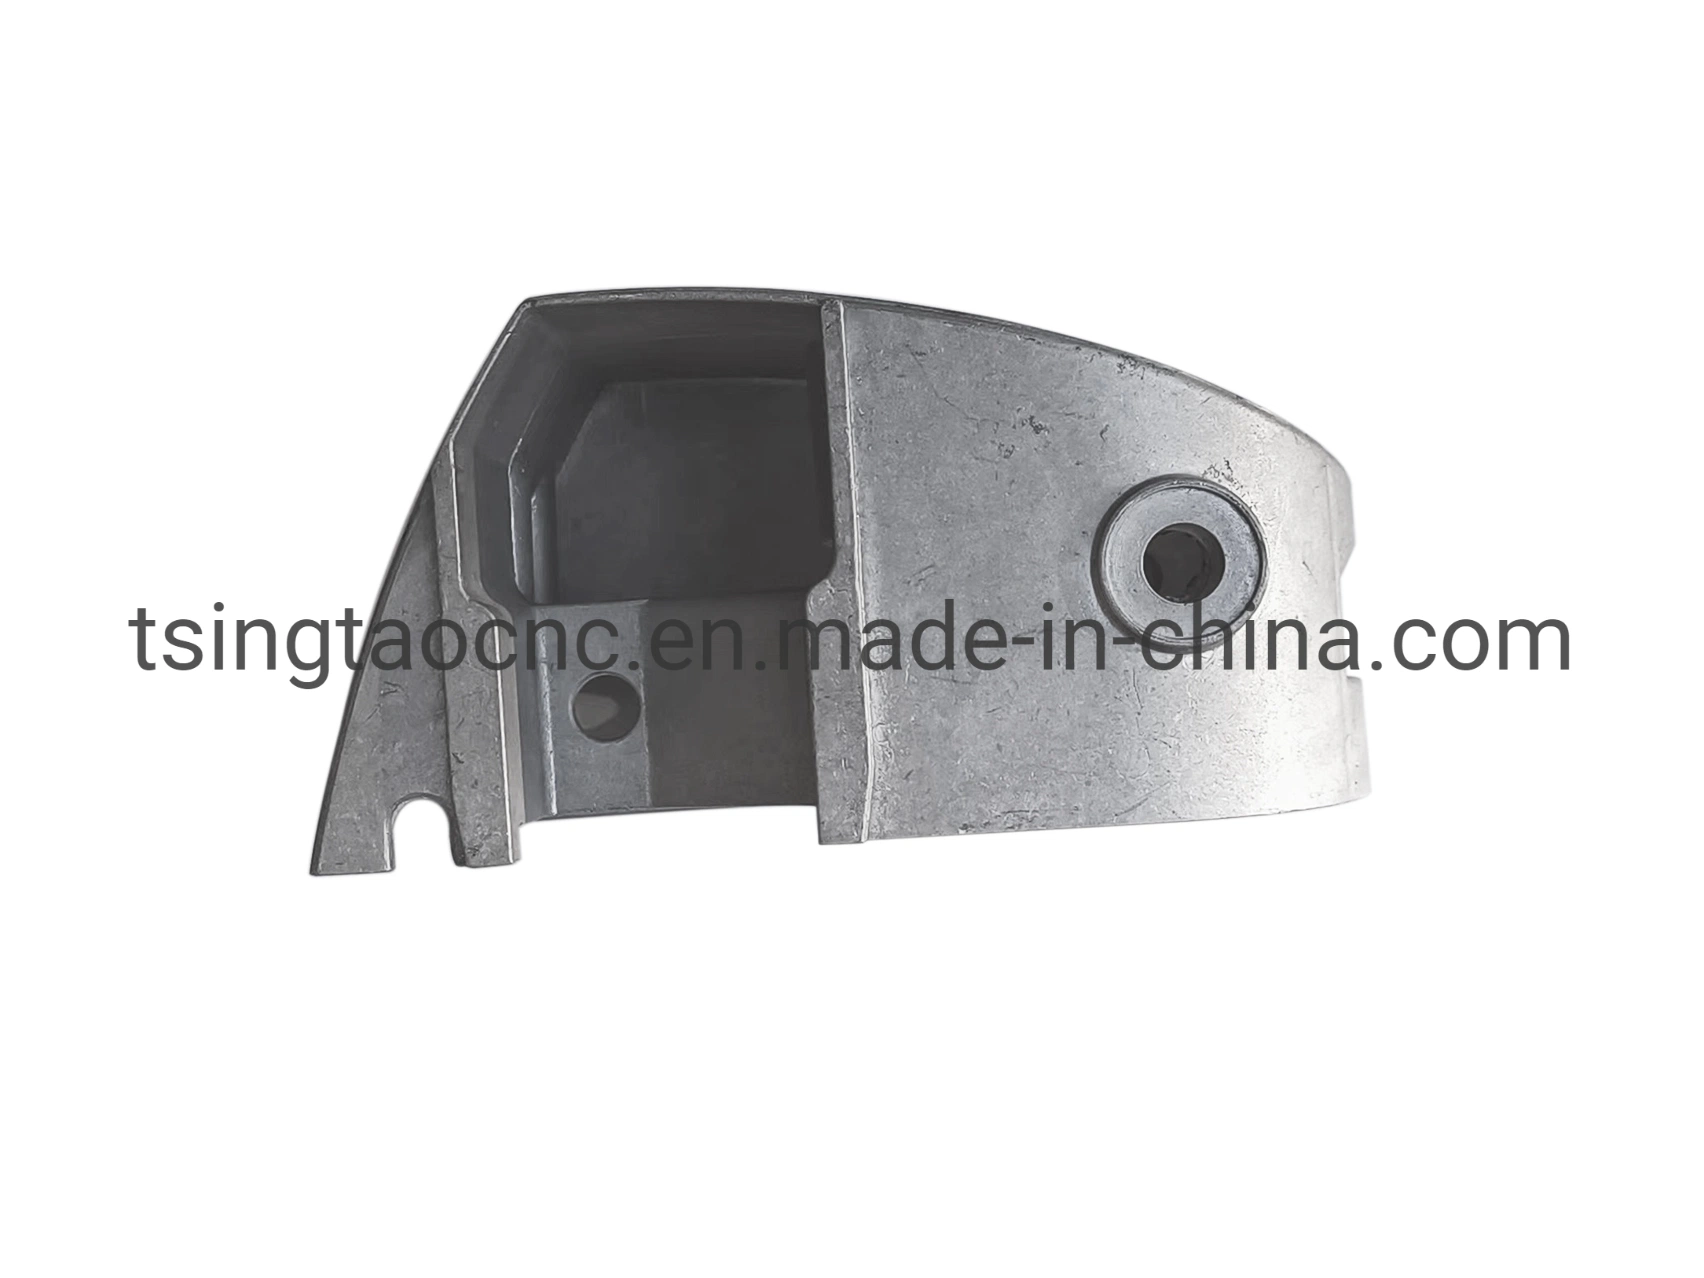 Customized Metal Zinc Alloy Aluminum Die Casting Products